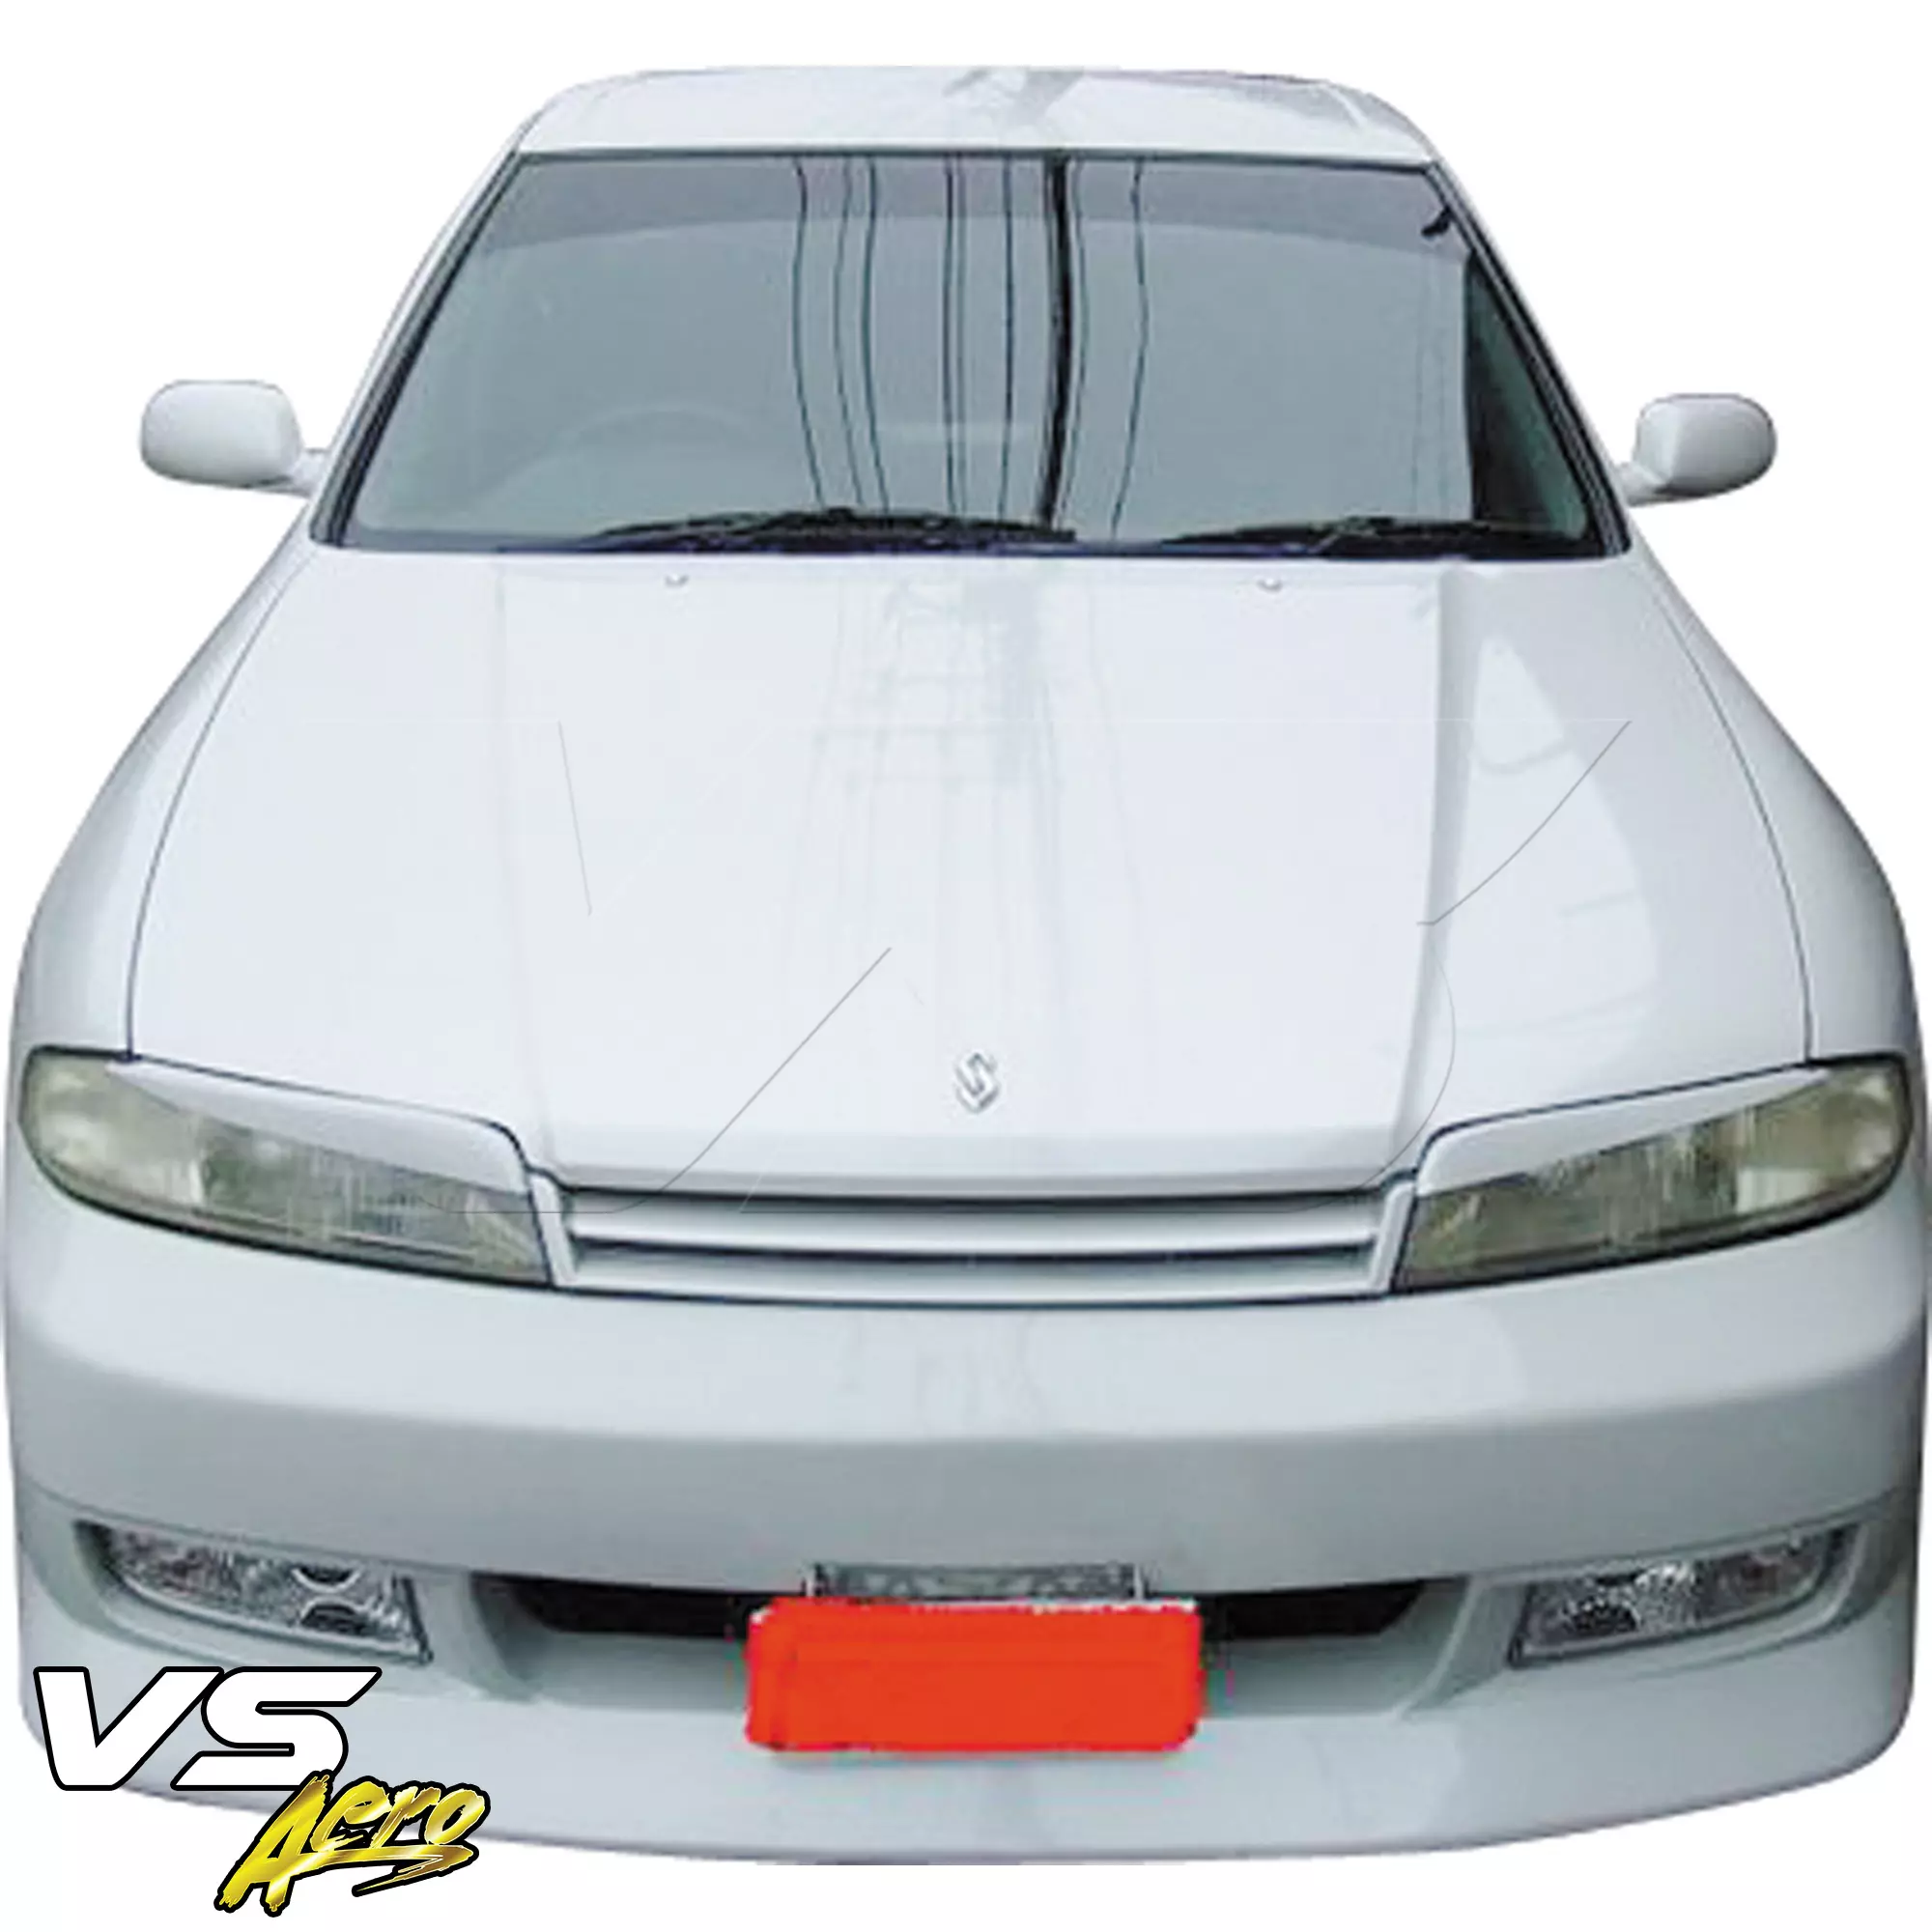 VSaero FRP FKON Body Kit 4pc > Nissan Skyline R33 GTS 1995-1998 > 2dr Coupe - Image 6